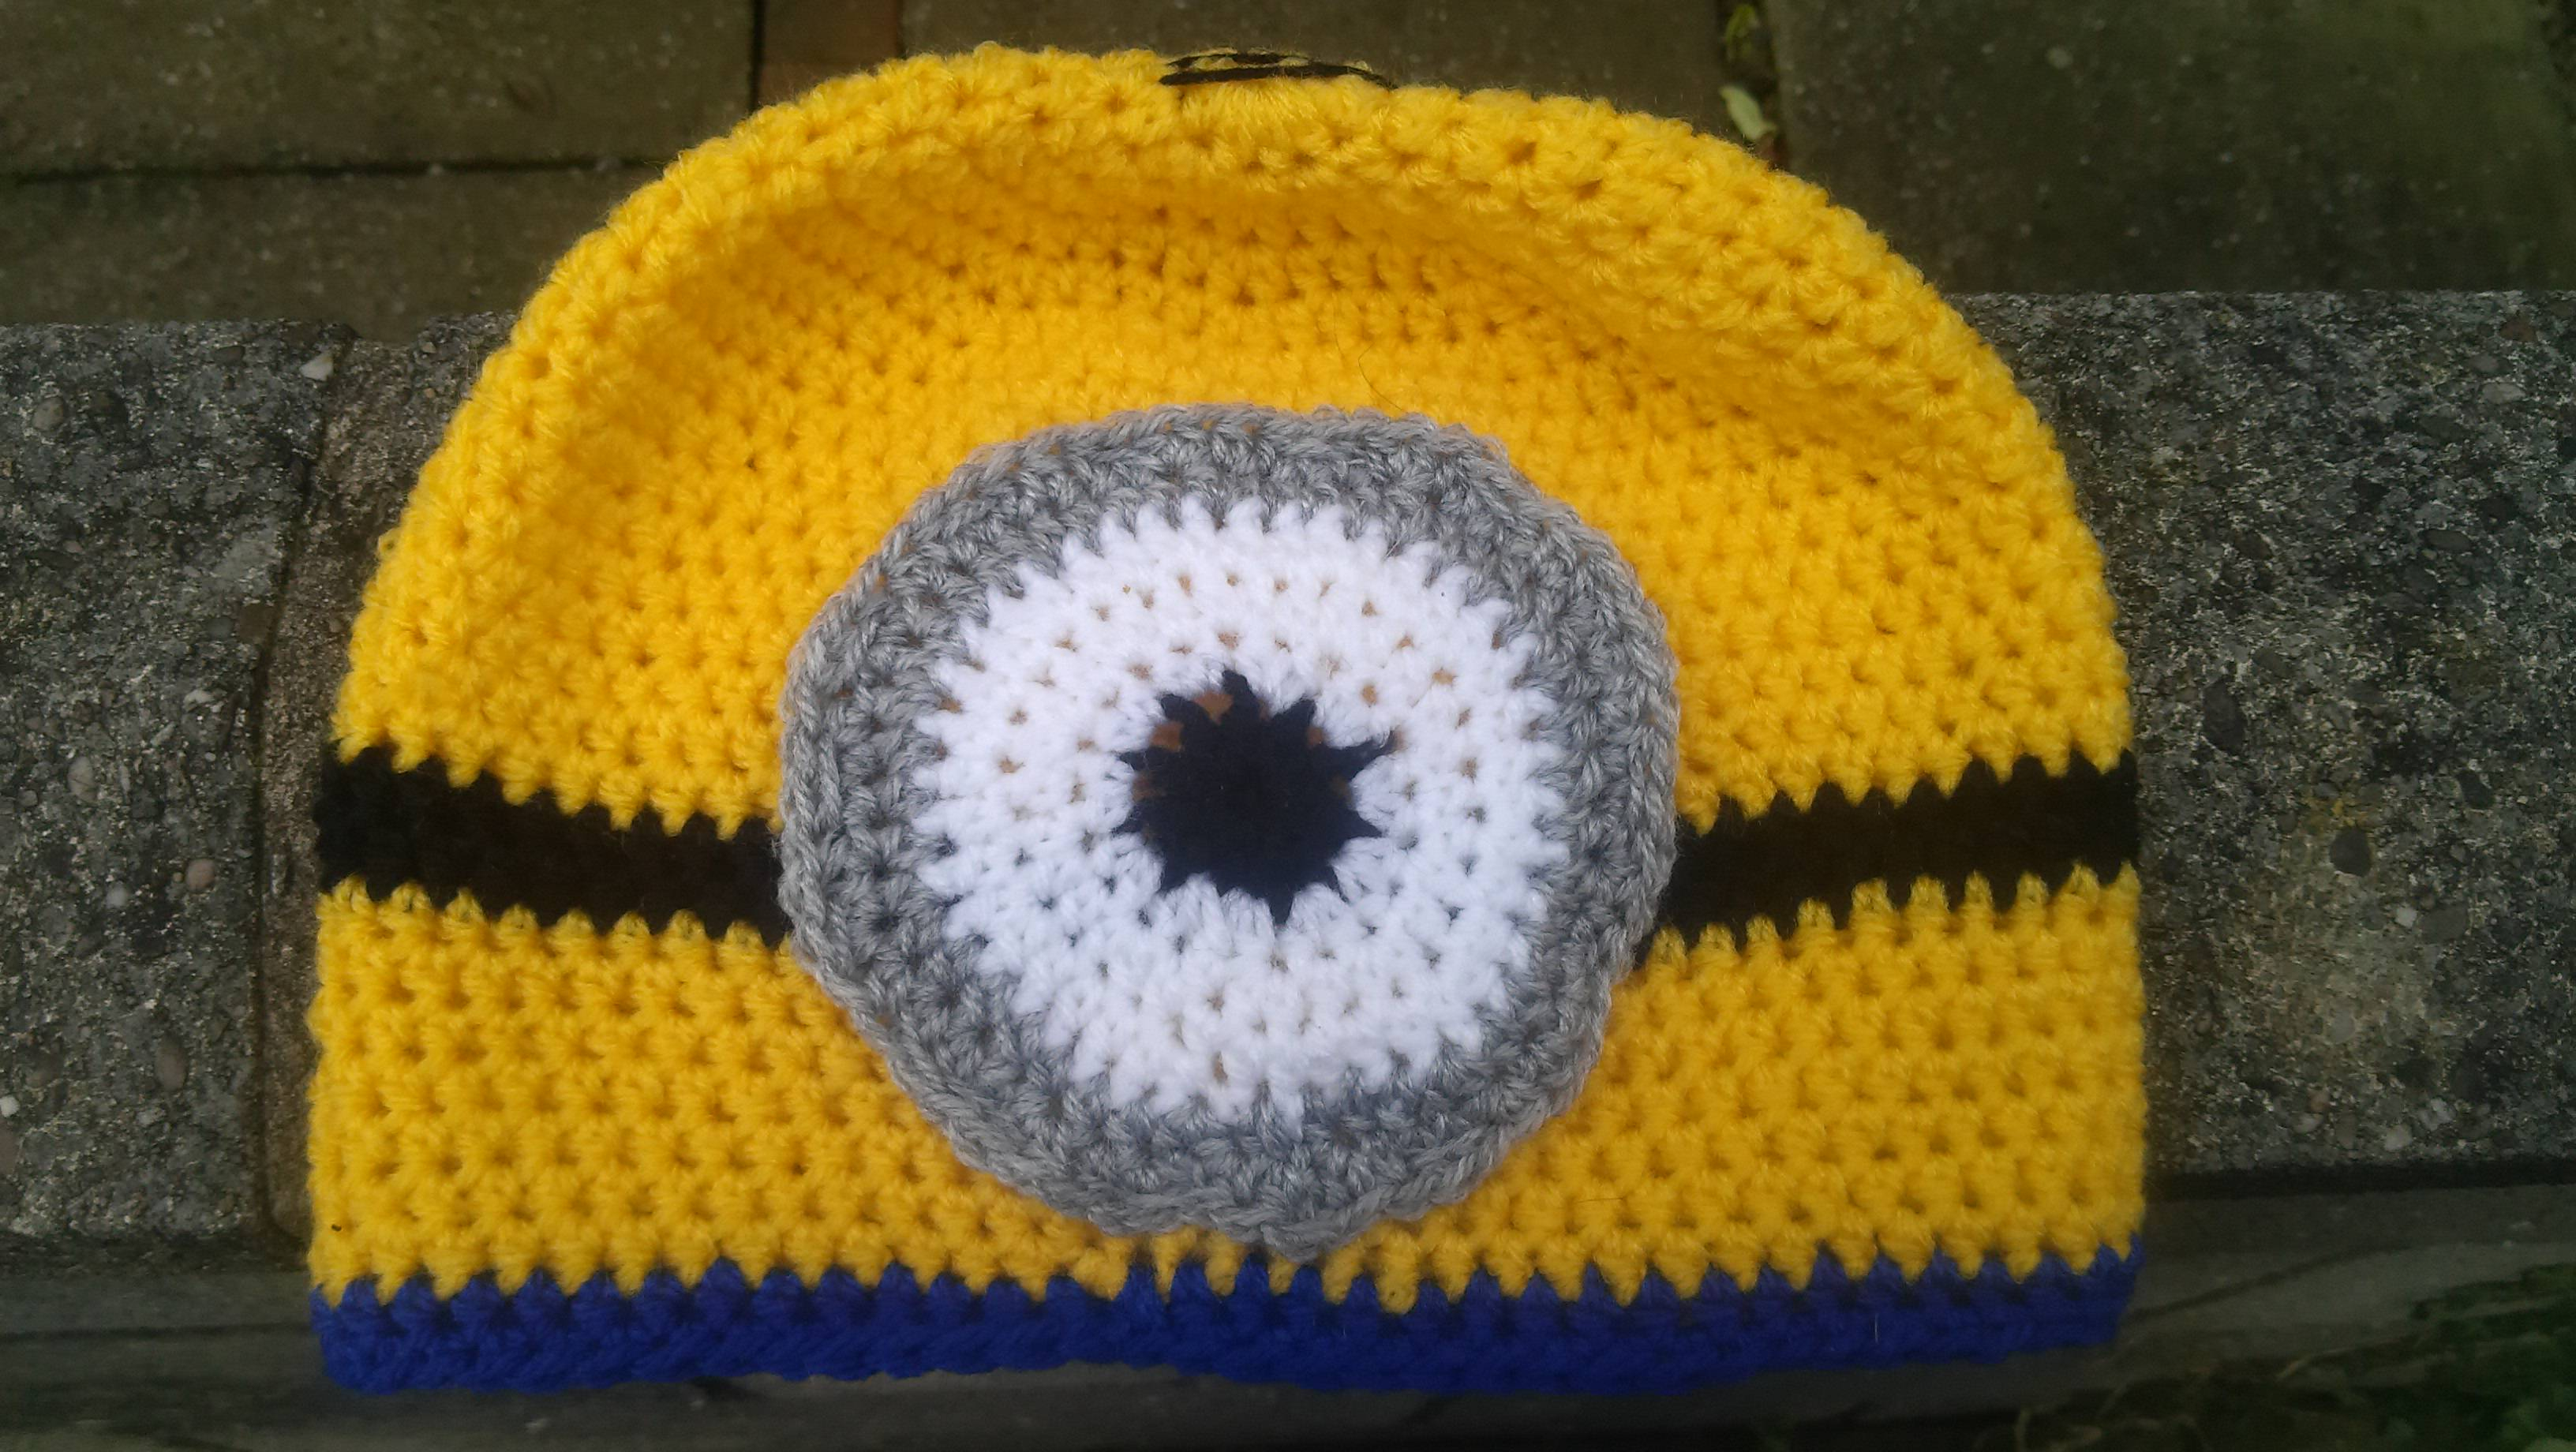 Crochet Minion Hat Pattern Hat Inspired Minions New Free Tutorial From Ukcrochetpatterns